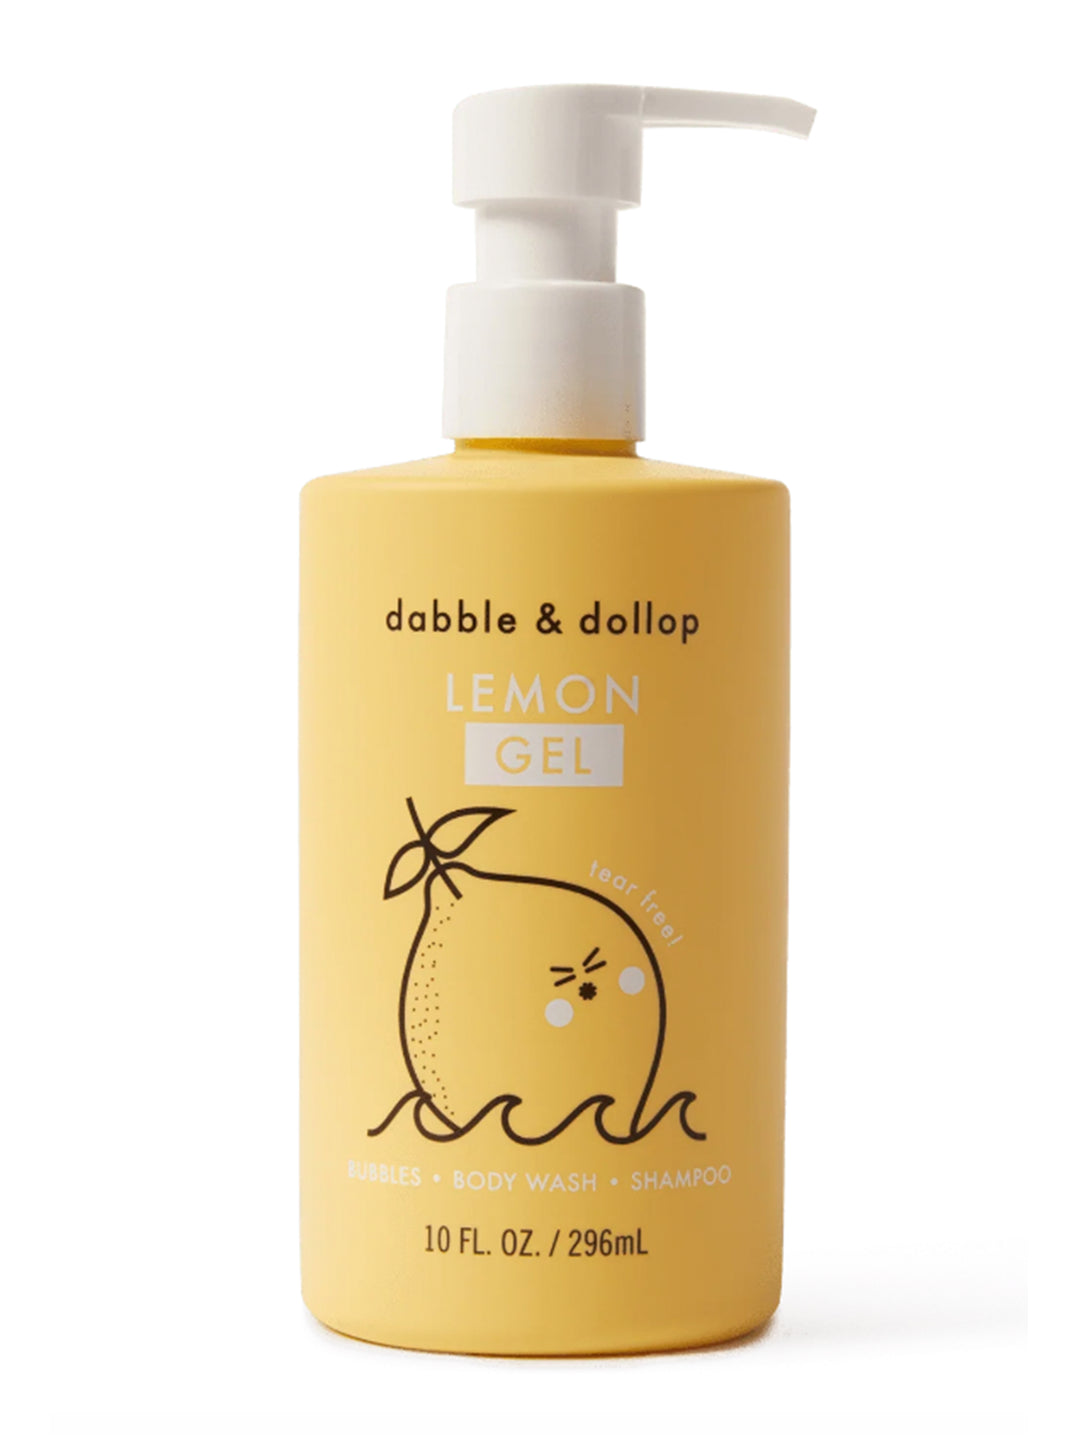 Dabble & Dollop Lemon Gel - Bubbles, Body Wash, and Shampoo